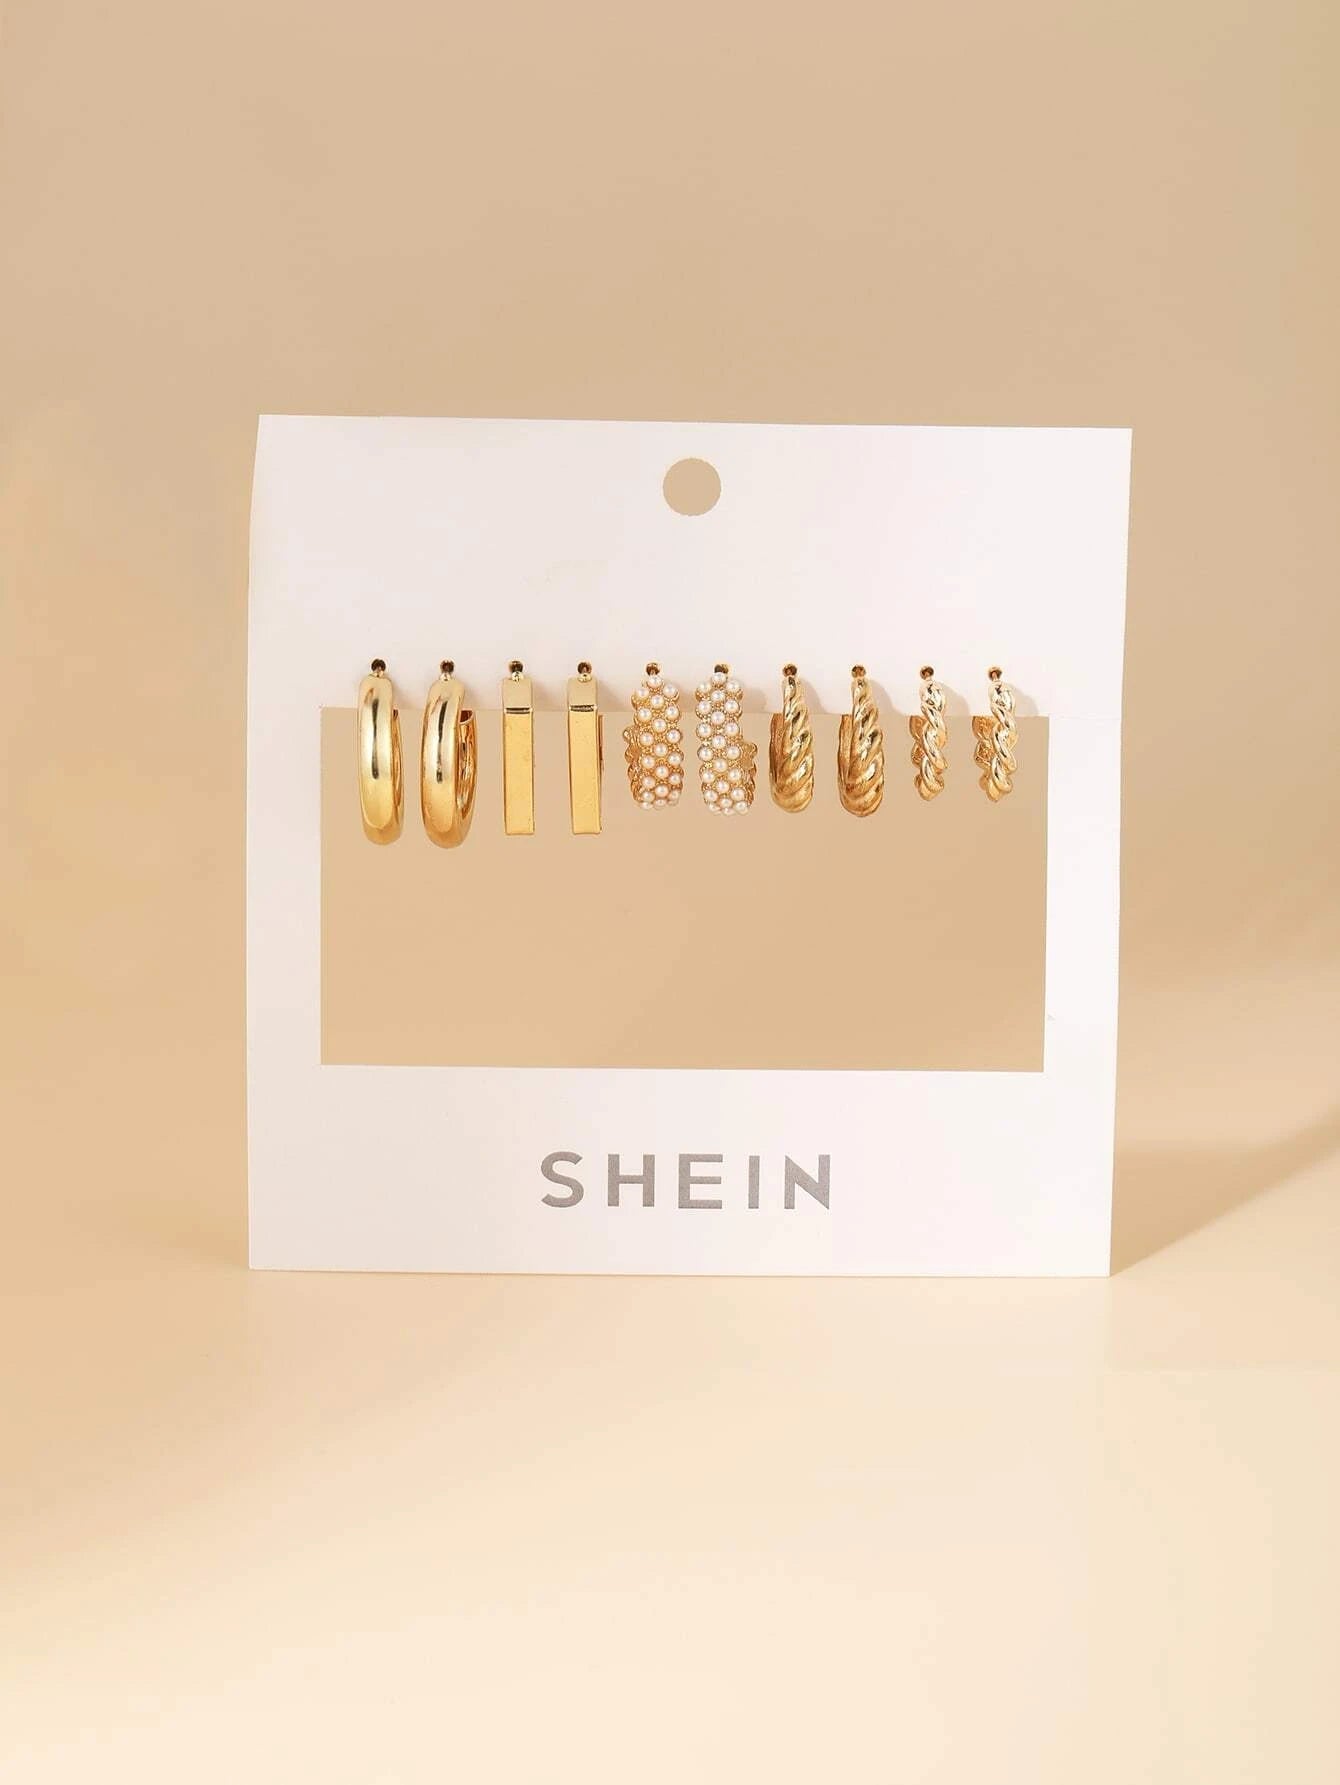  | Shein 5pairs Faux Pearl Decor Hoop Earrings | Earrings | Shein | OneHub